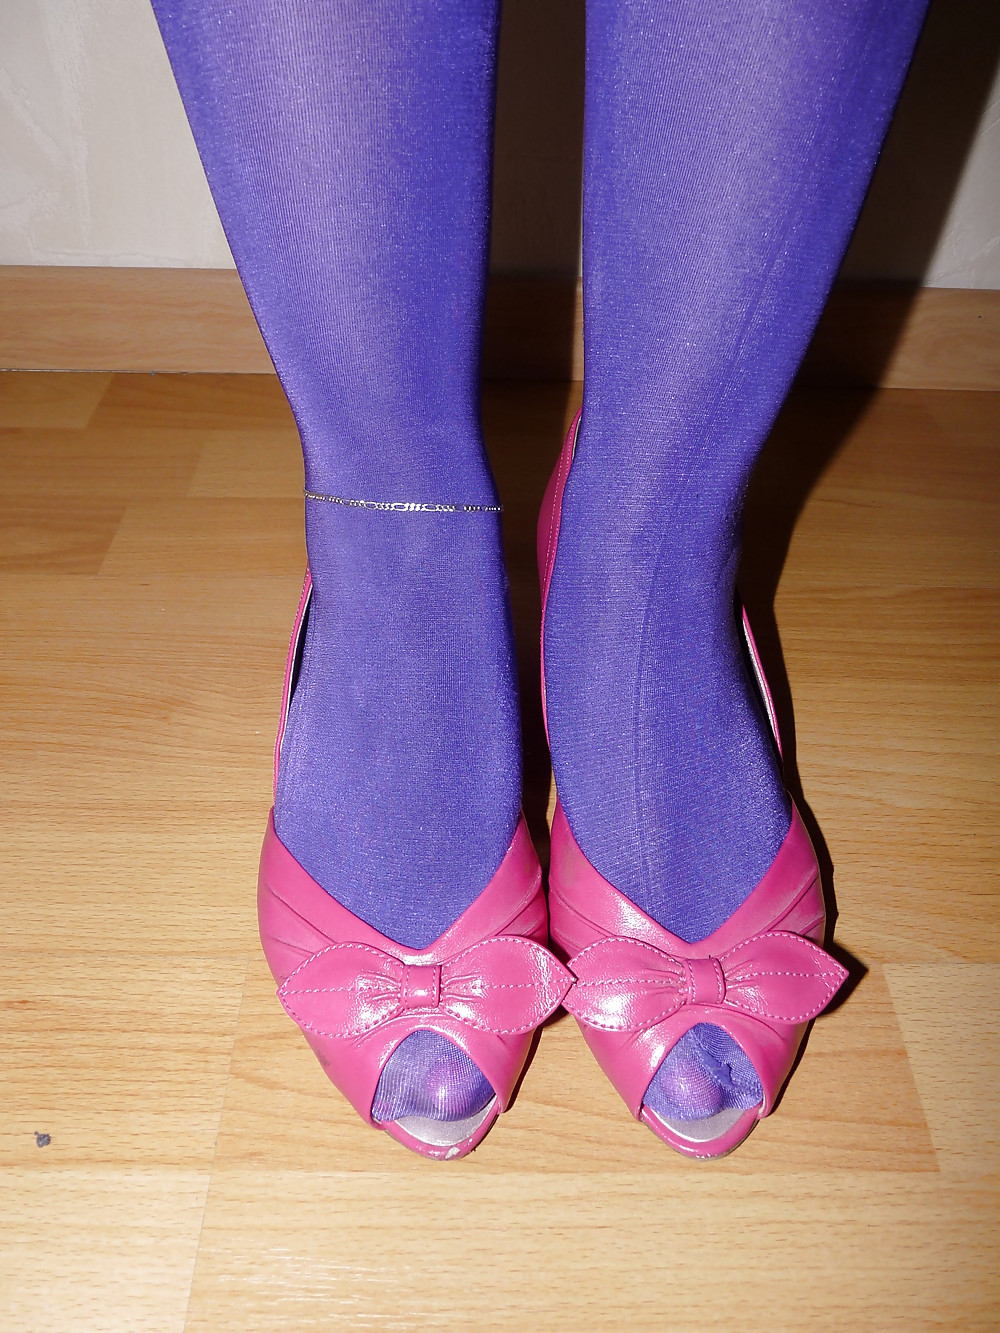 Moglie lucida viola collant rosa peep toes
 #15417065